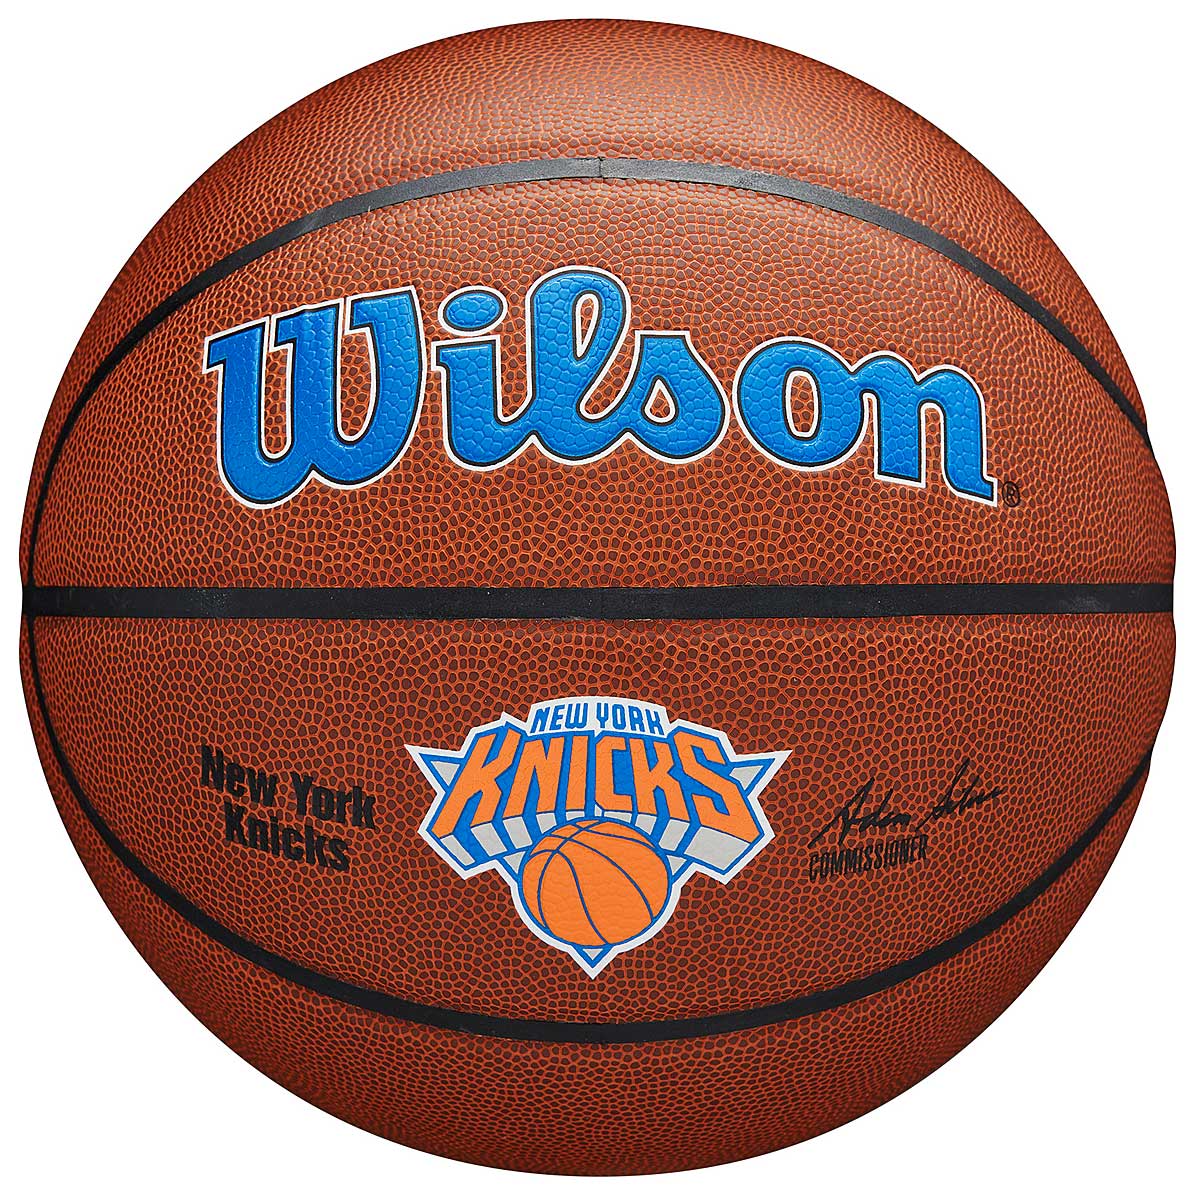 Wilson NBA New York Knicks Team Composite Basketball, New York Knicks Otc 7